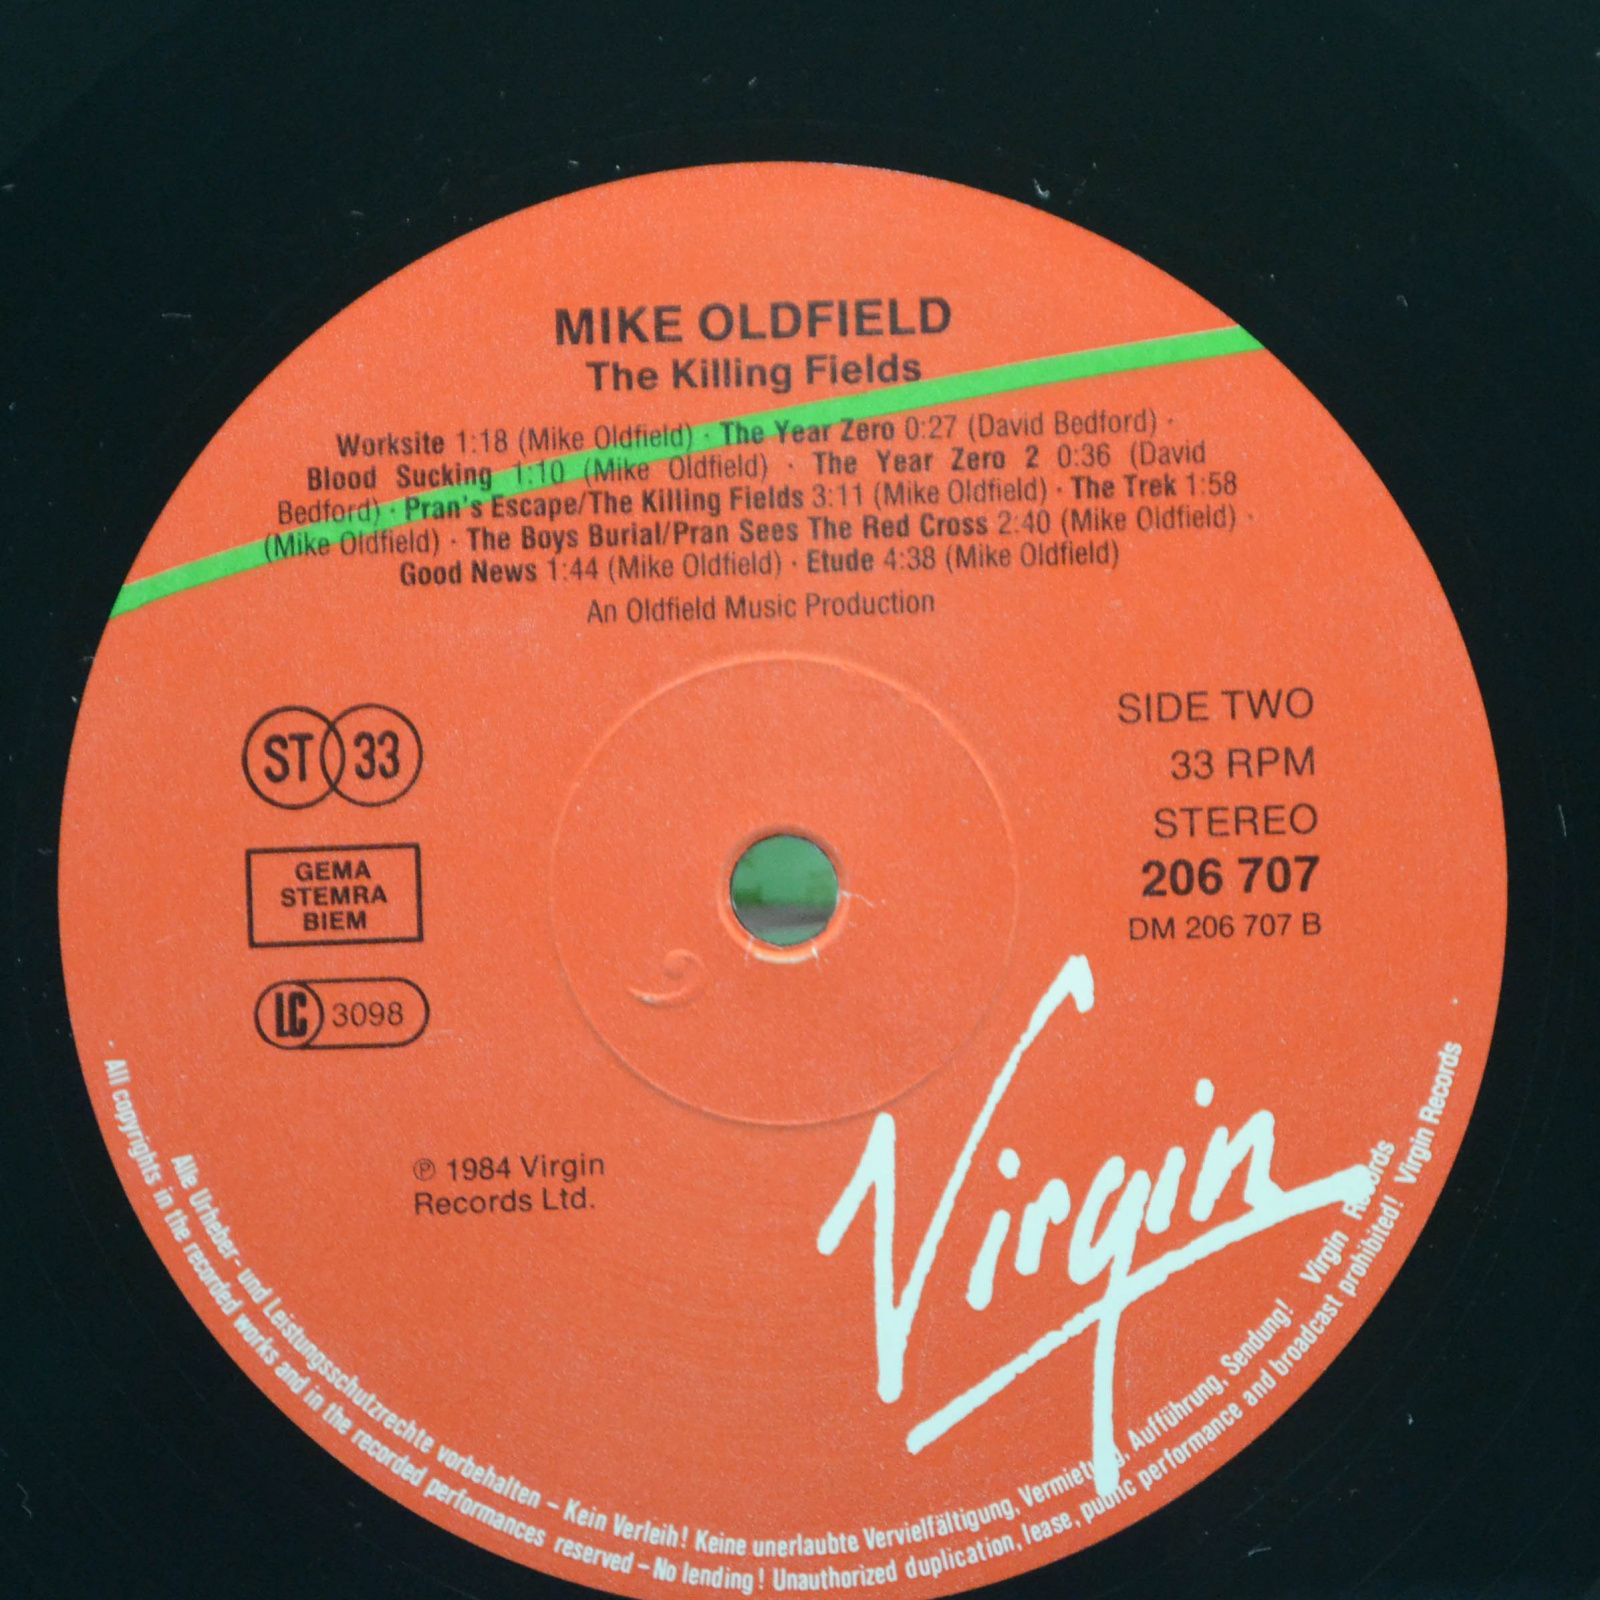 Mike Oldfield — The Killing Fields (Original Film Soundtrack), 1984